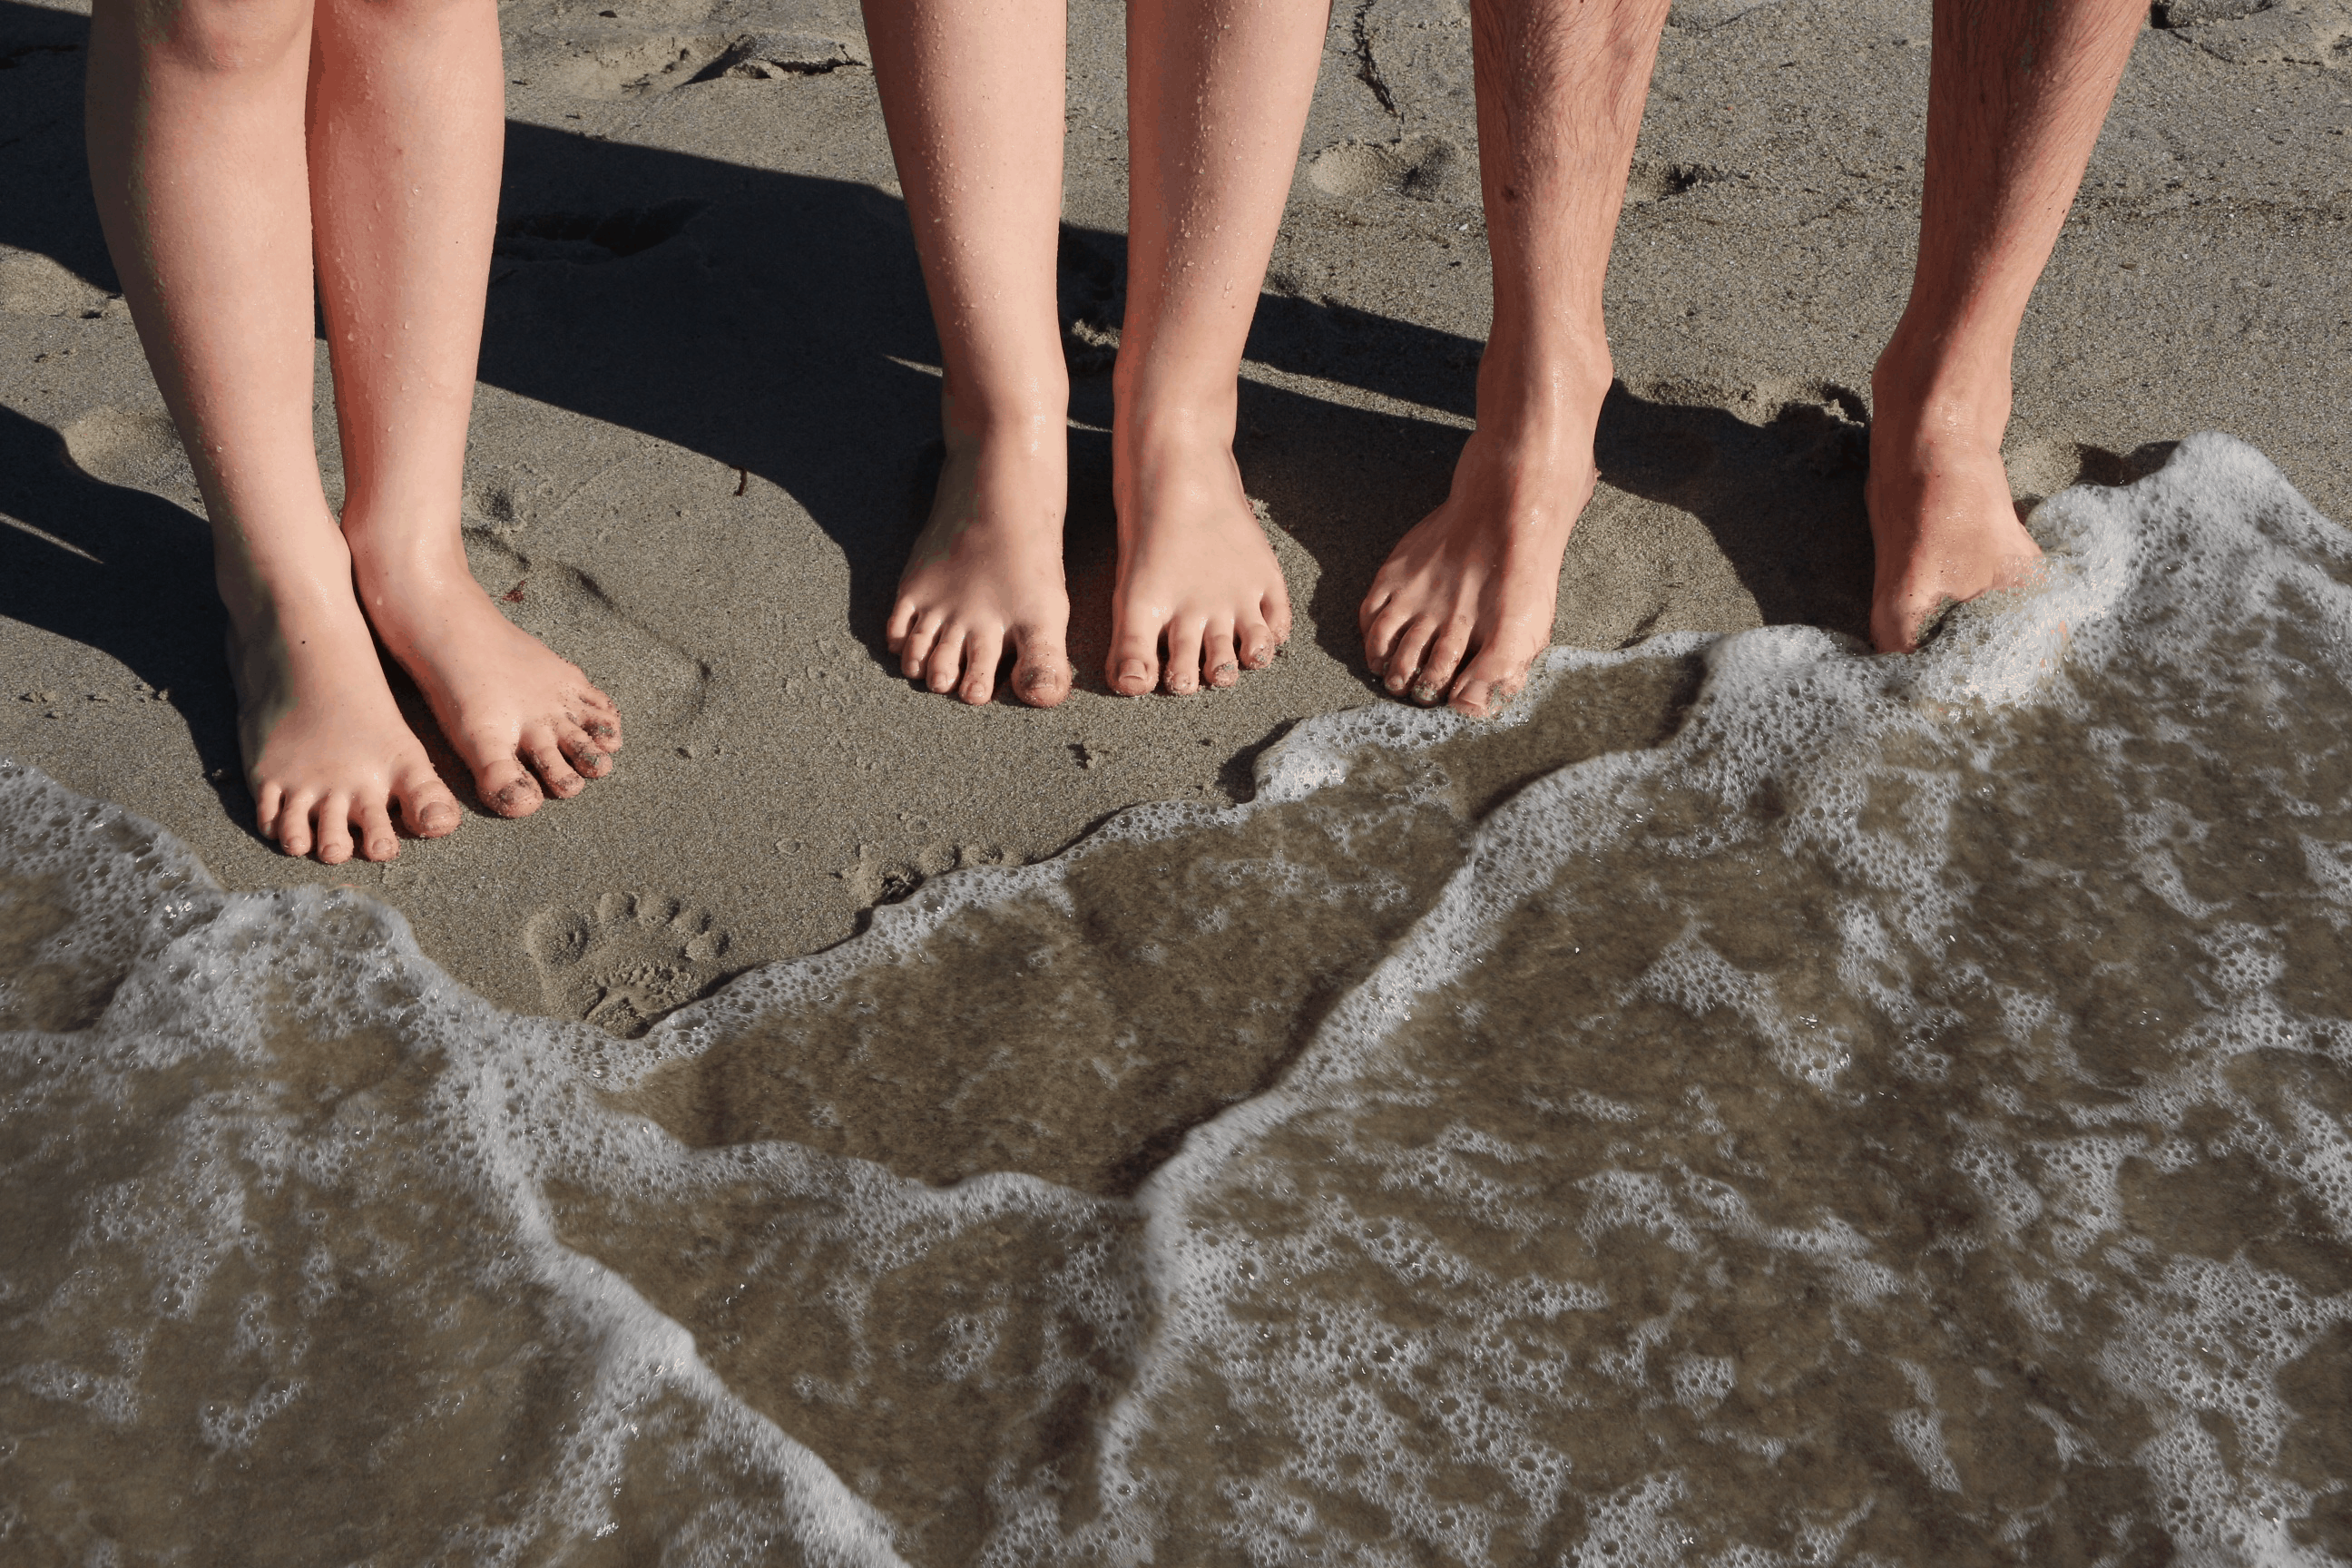 Walking barefoot: good or bad? – oreme - Next-Generation, Non